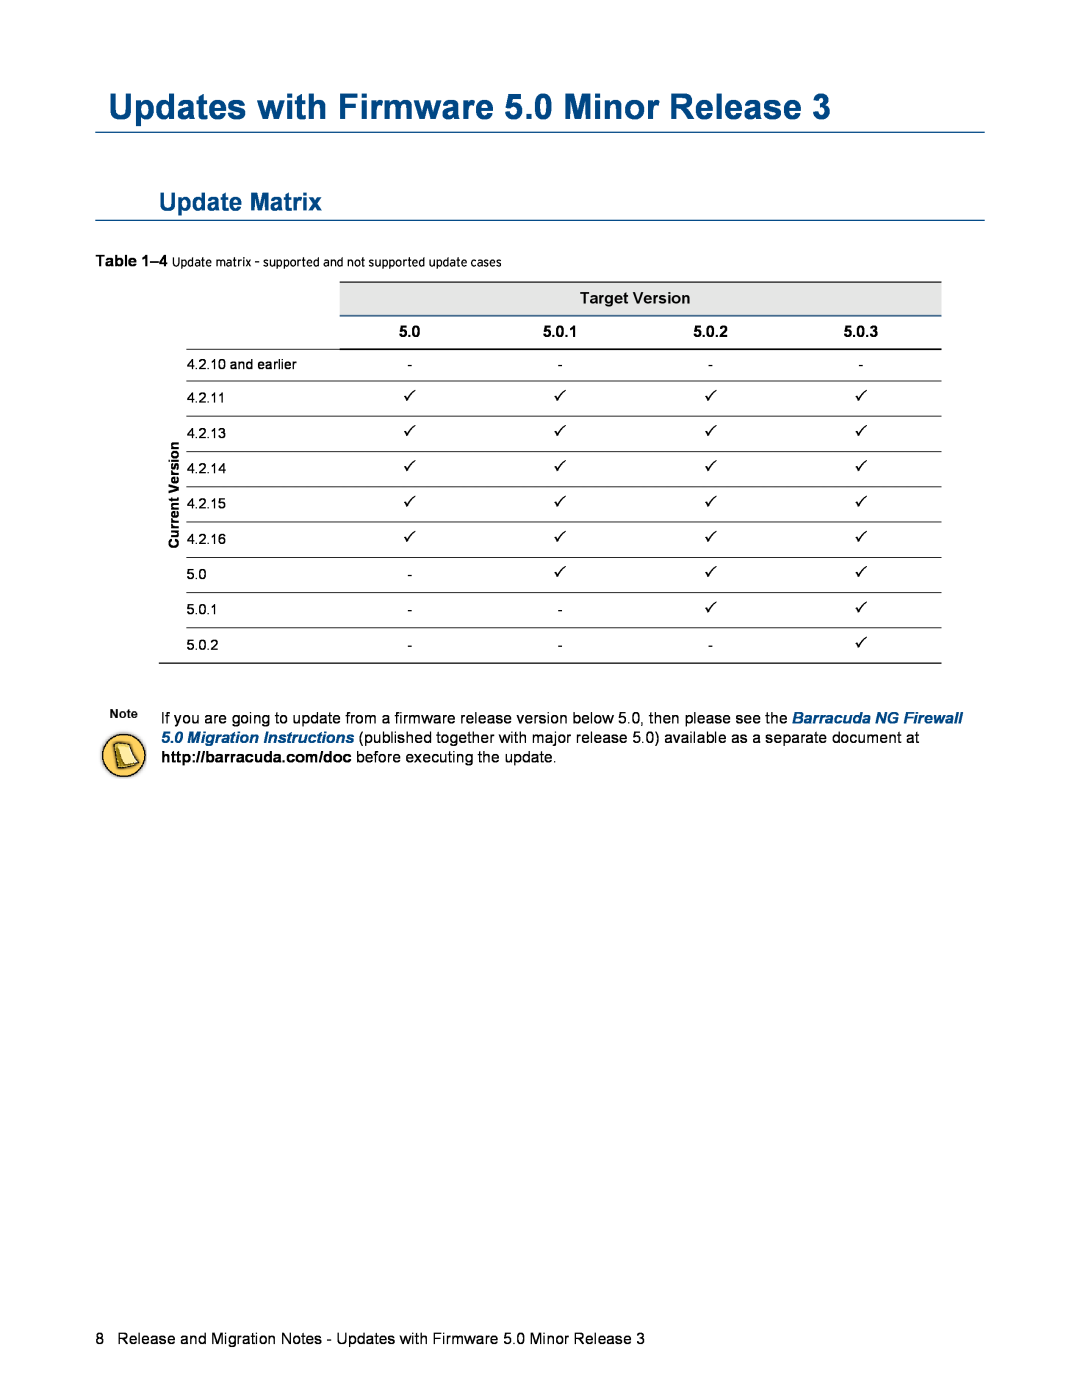 Barracuda Networks 5.0.3 manual Updates with Firmware 5.0 Minor Release, Update Matrix 